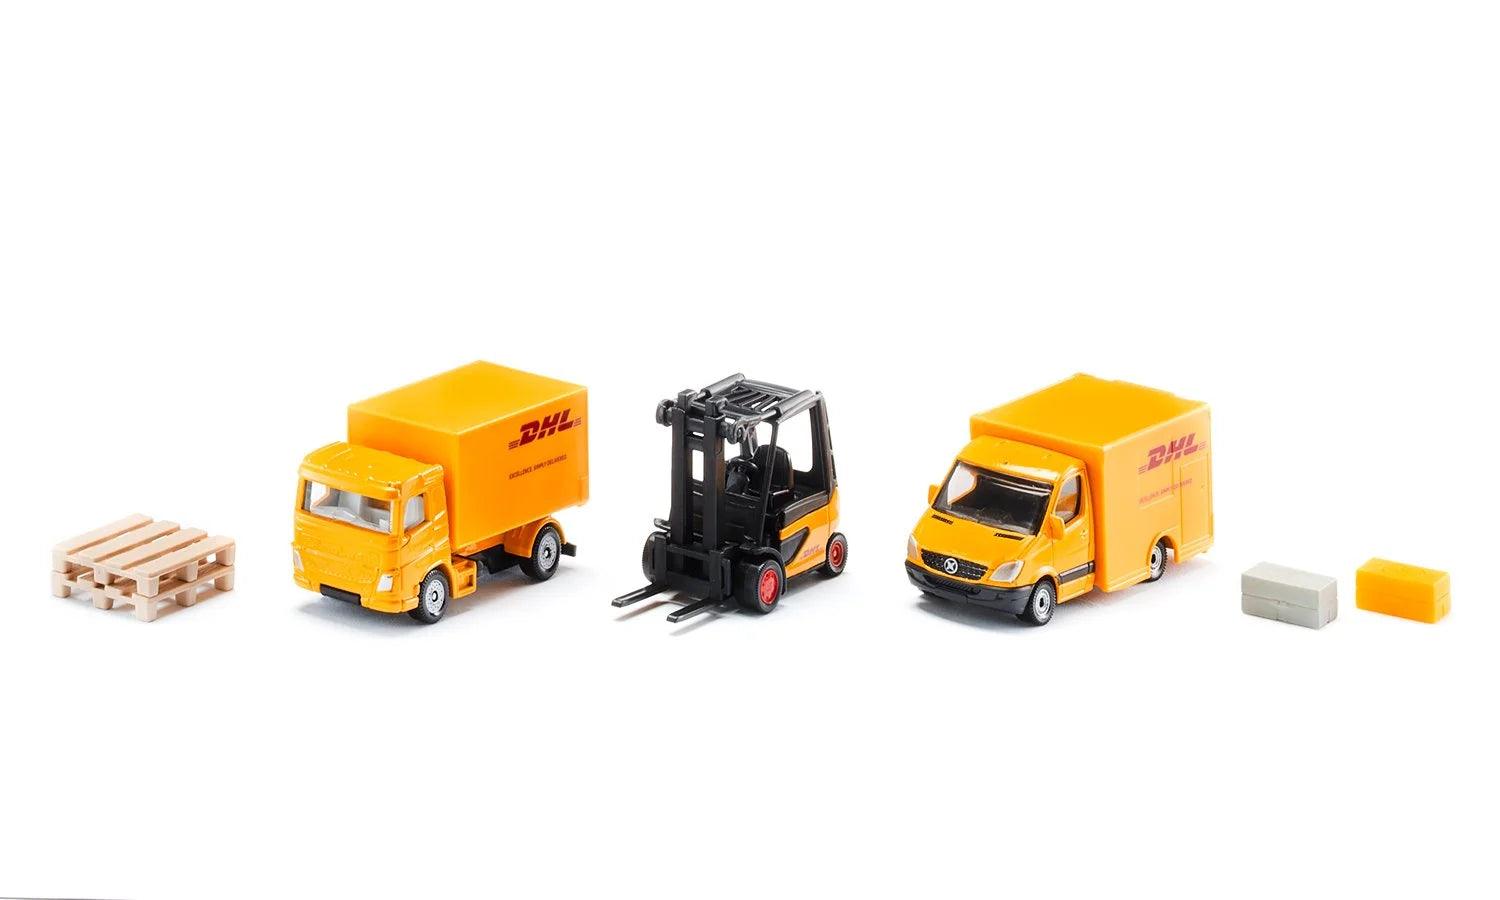 Siku 6335 4pcs DHL Logistics Vehicles Gift Set (Boxed) - Taylorson